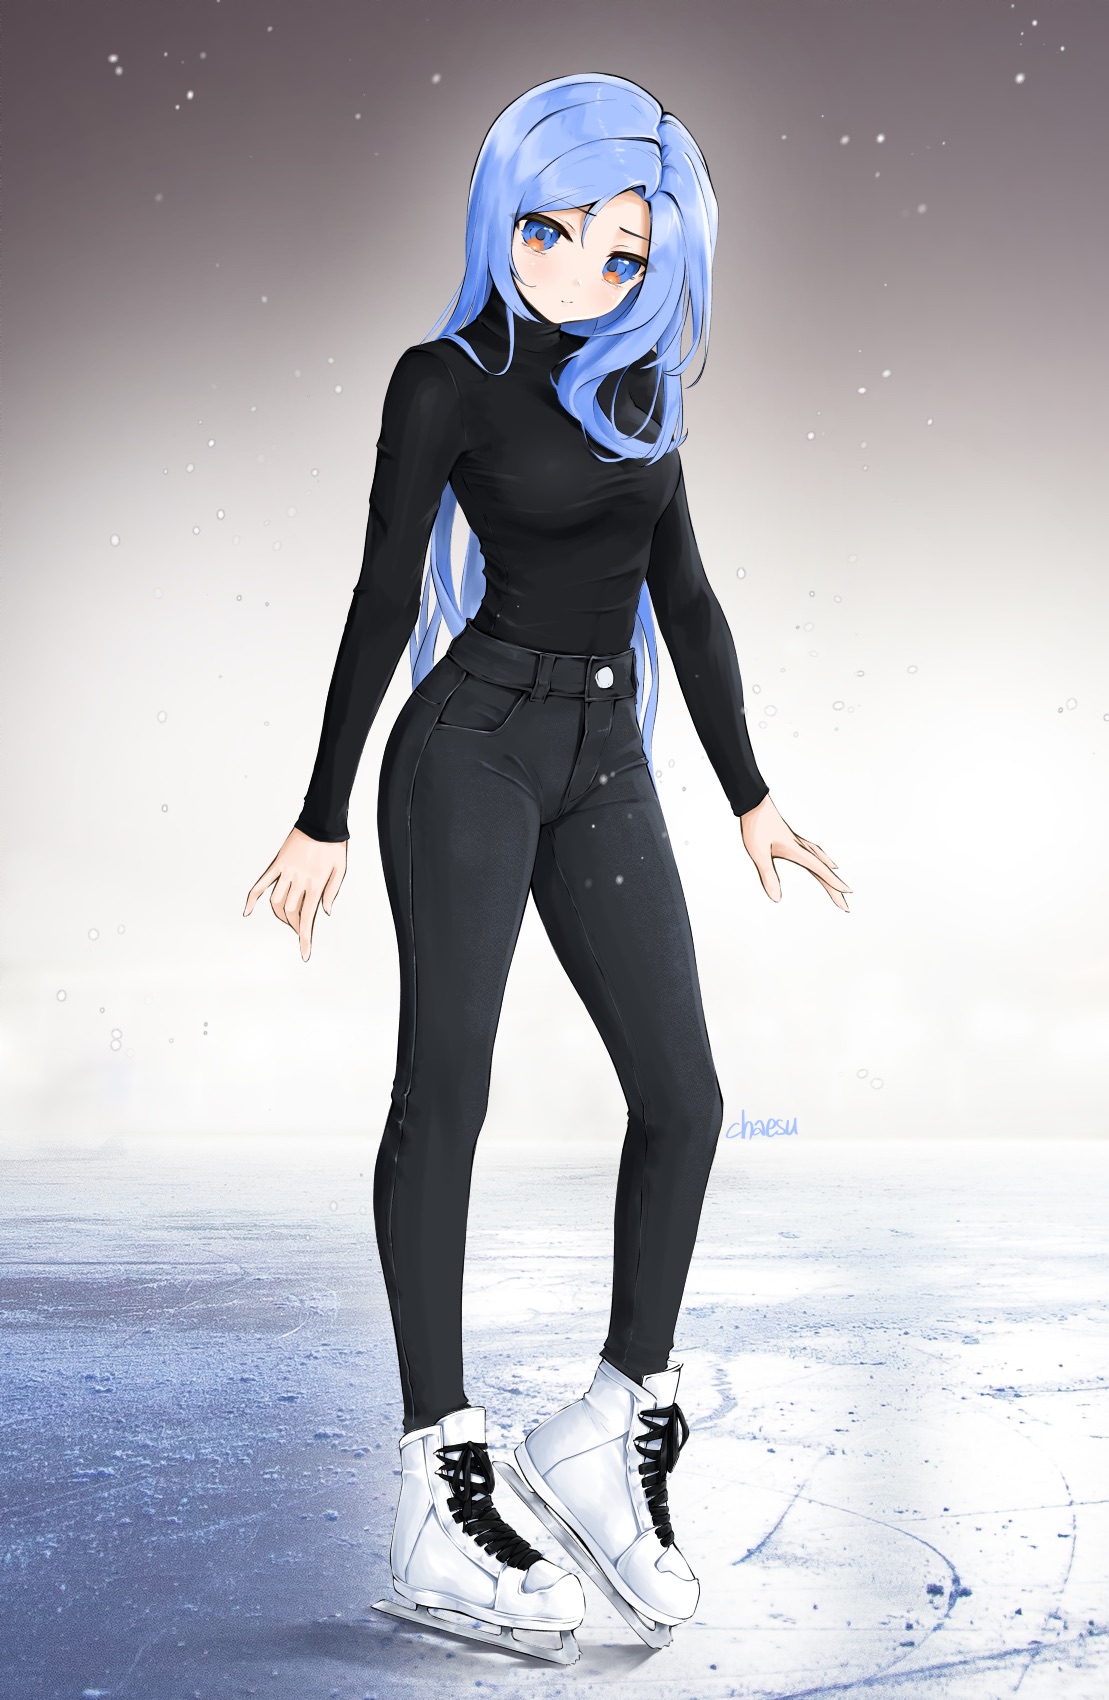 Anime 1109x1700 anime anime girls digital art 2D black pants black shirt ice skate Chaesu blue hair